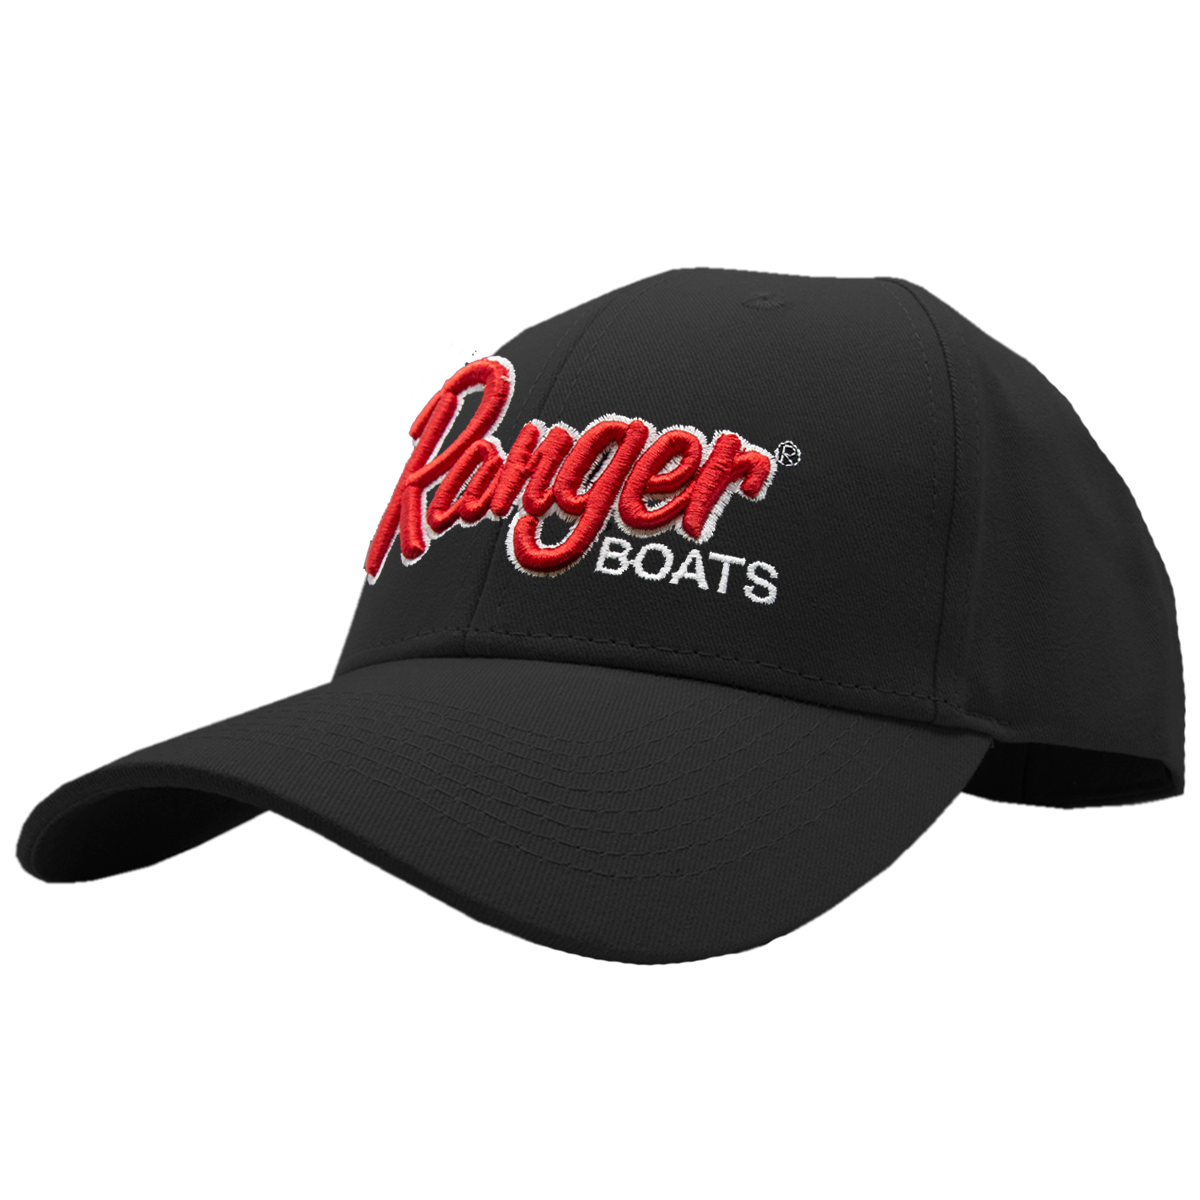 NEW sale! Ranger Boats Team Fishing boat Logo T Shirt 